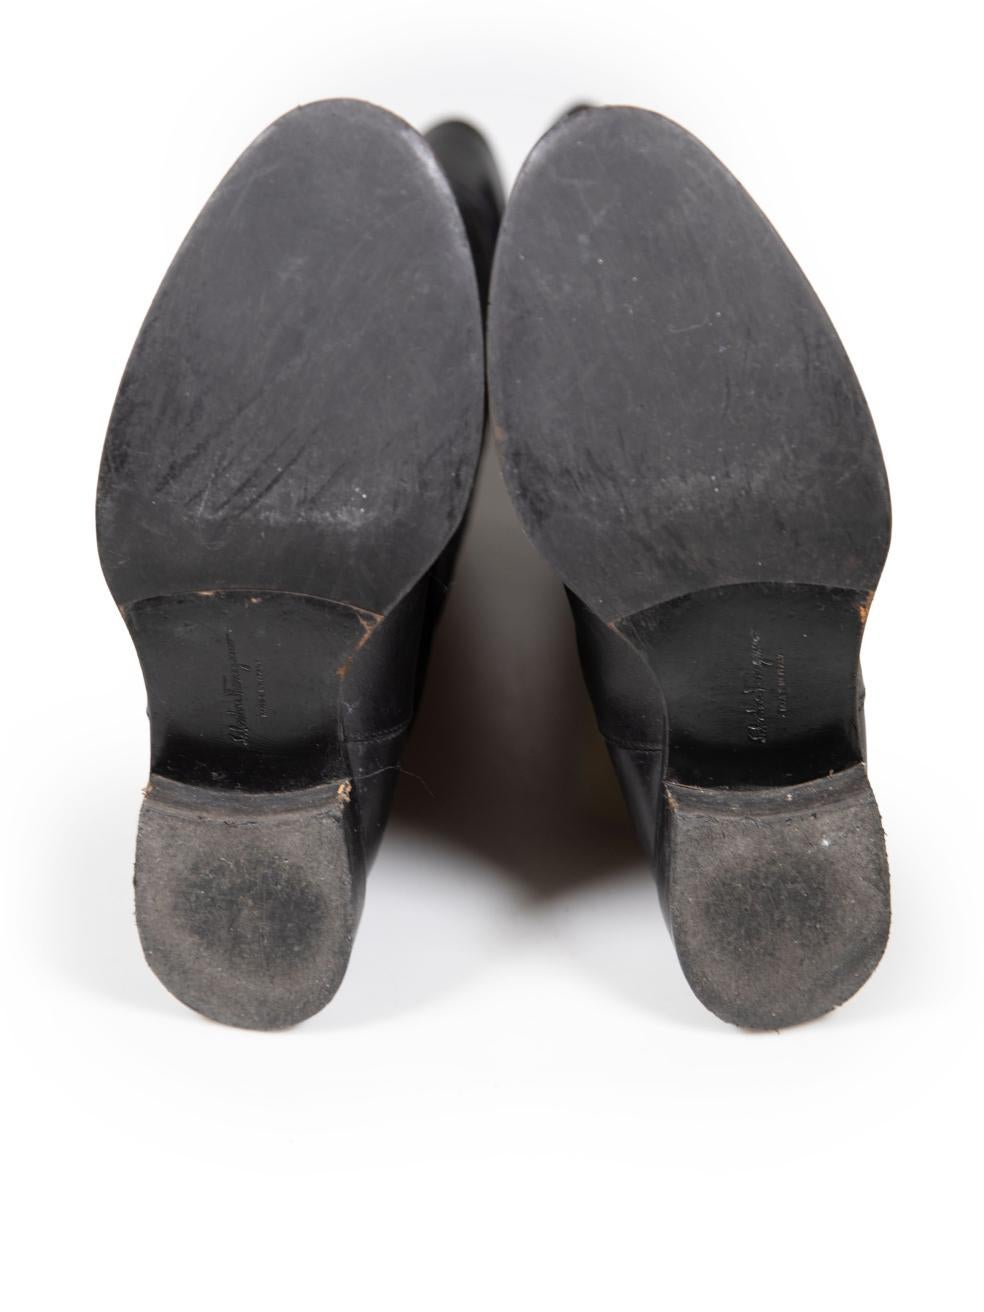 Women's Salvatore Ferragamo Black Leather Riding Boots Size US 5 For Sale